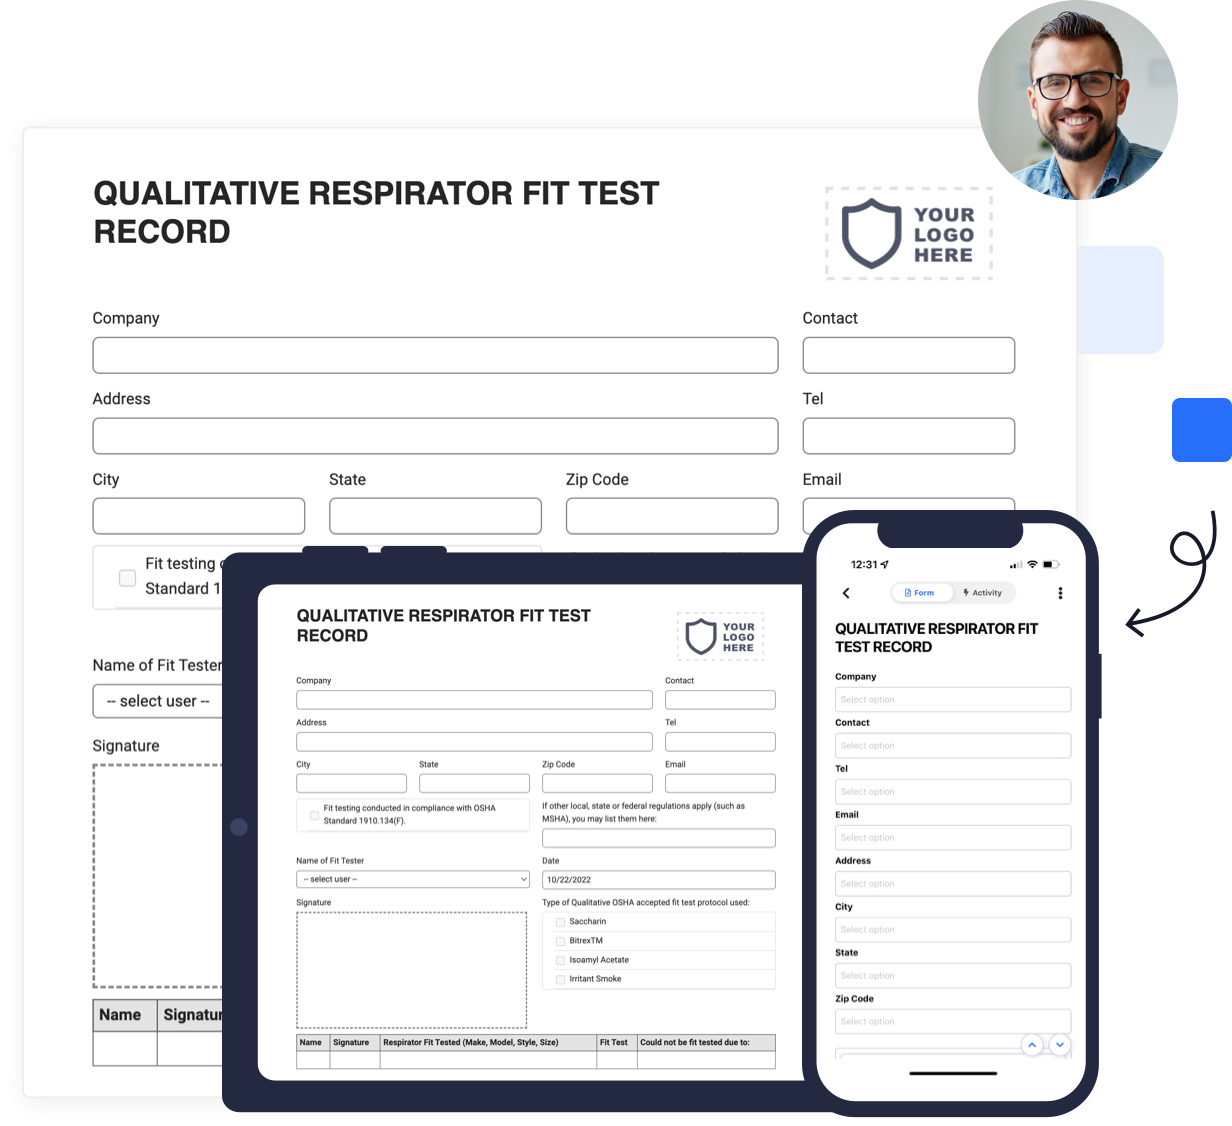 mobile qualitative respirator fit test form online